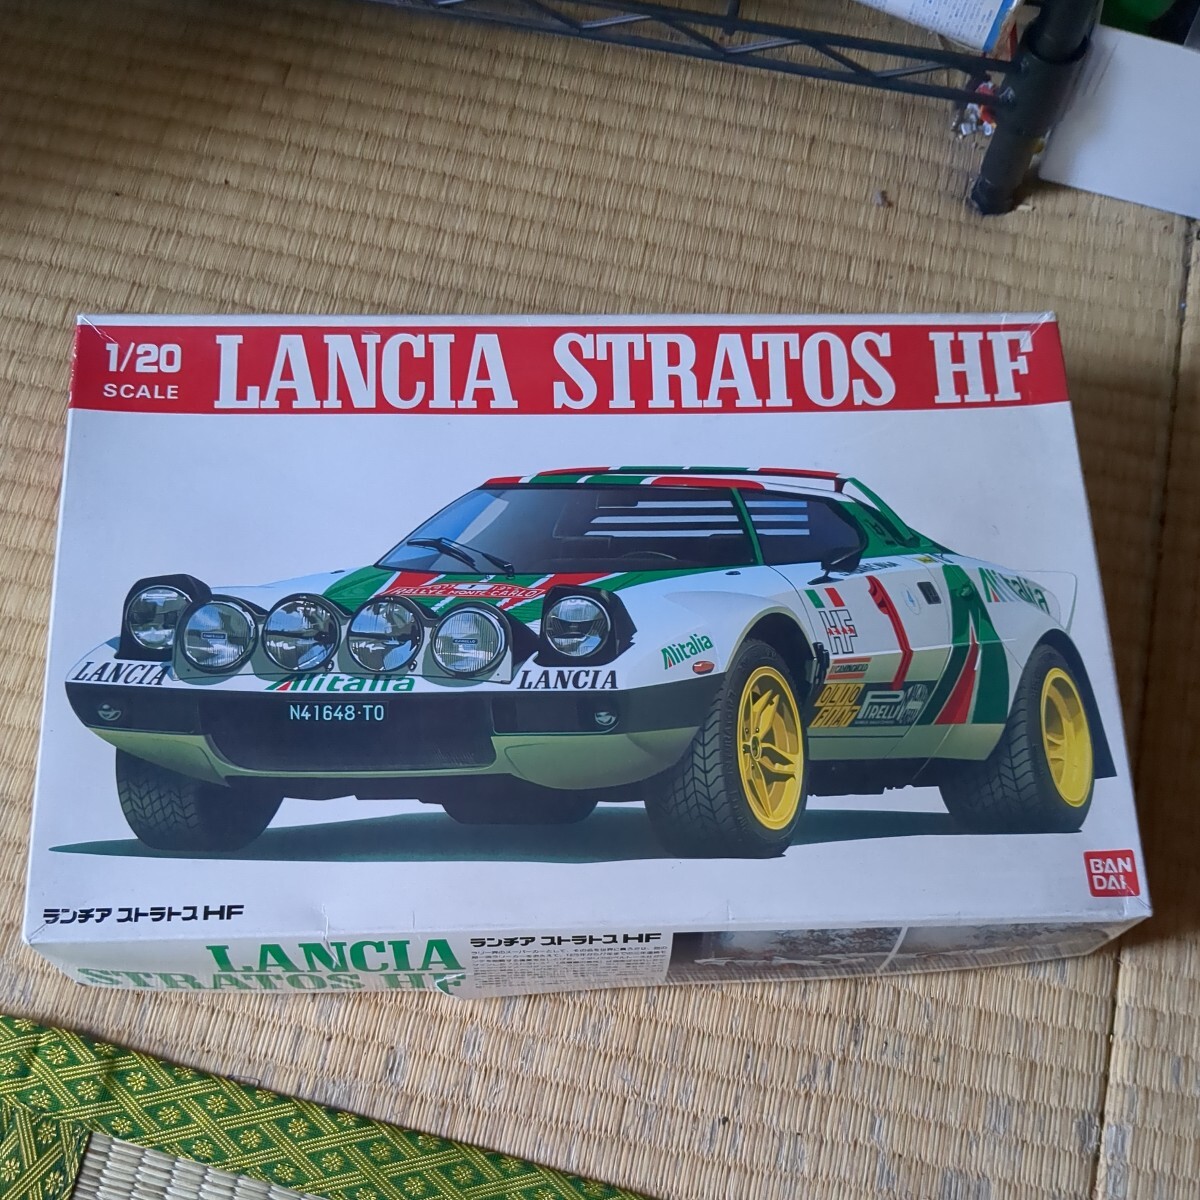  Bandai 1/20 Lancia Stratos HF not yet constructed 